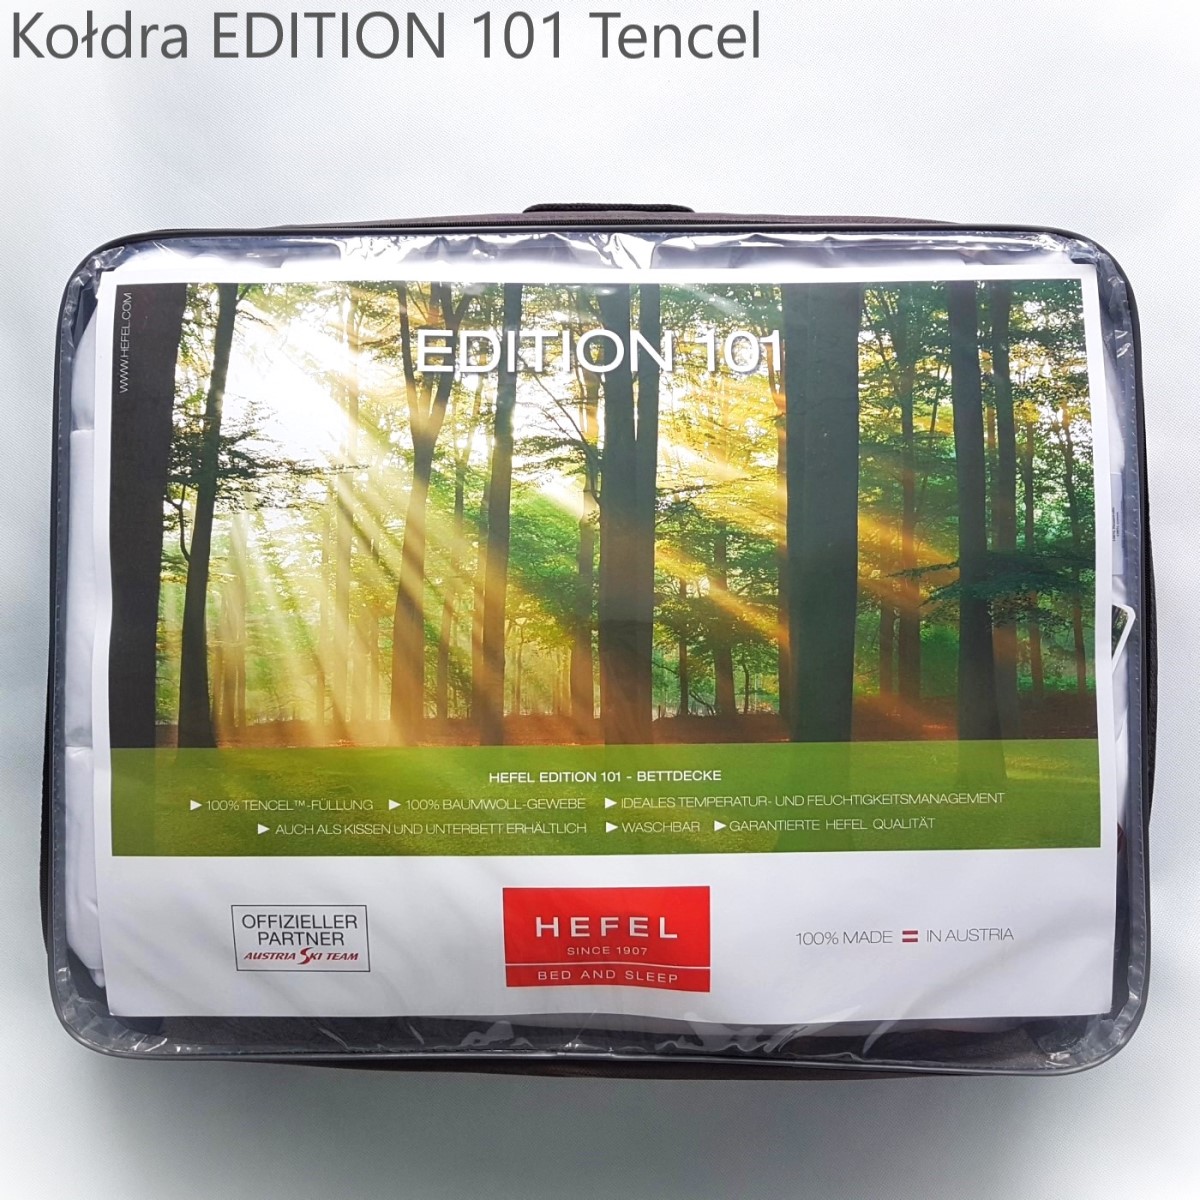 koldra tencel edition 101 hefel